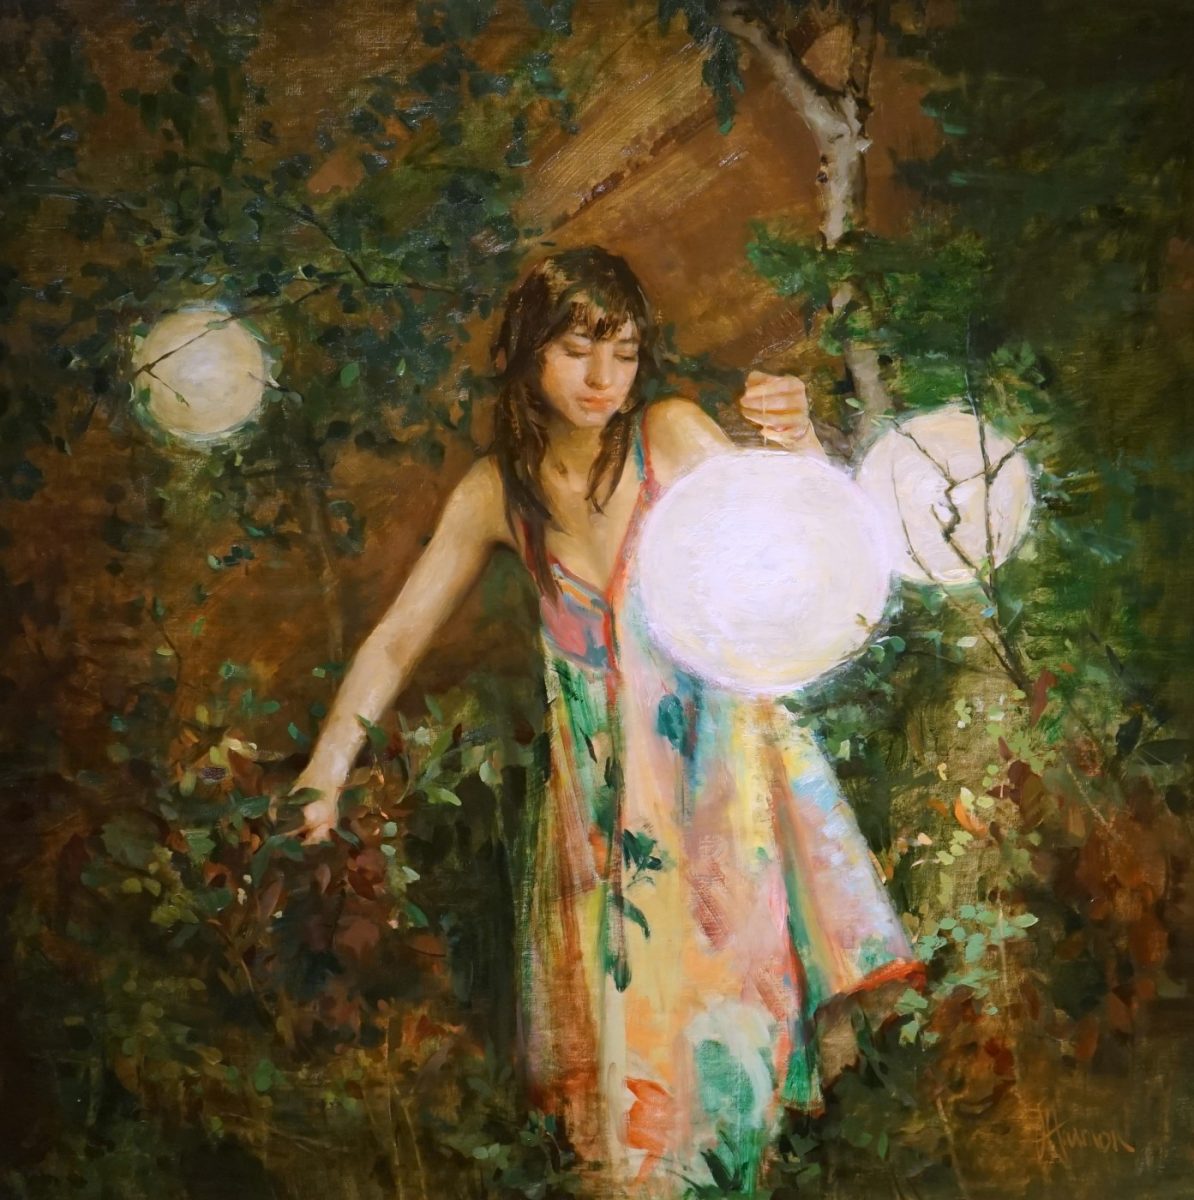 Portrait of woman in garden holding lanterns by Johanna Harmon